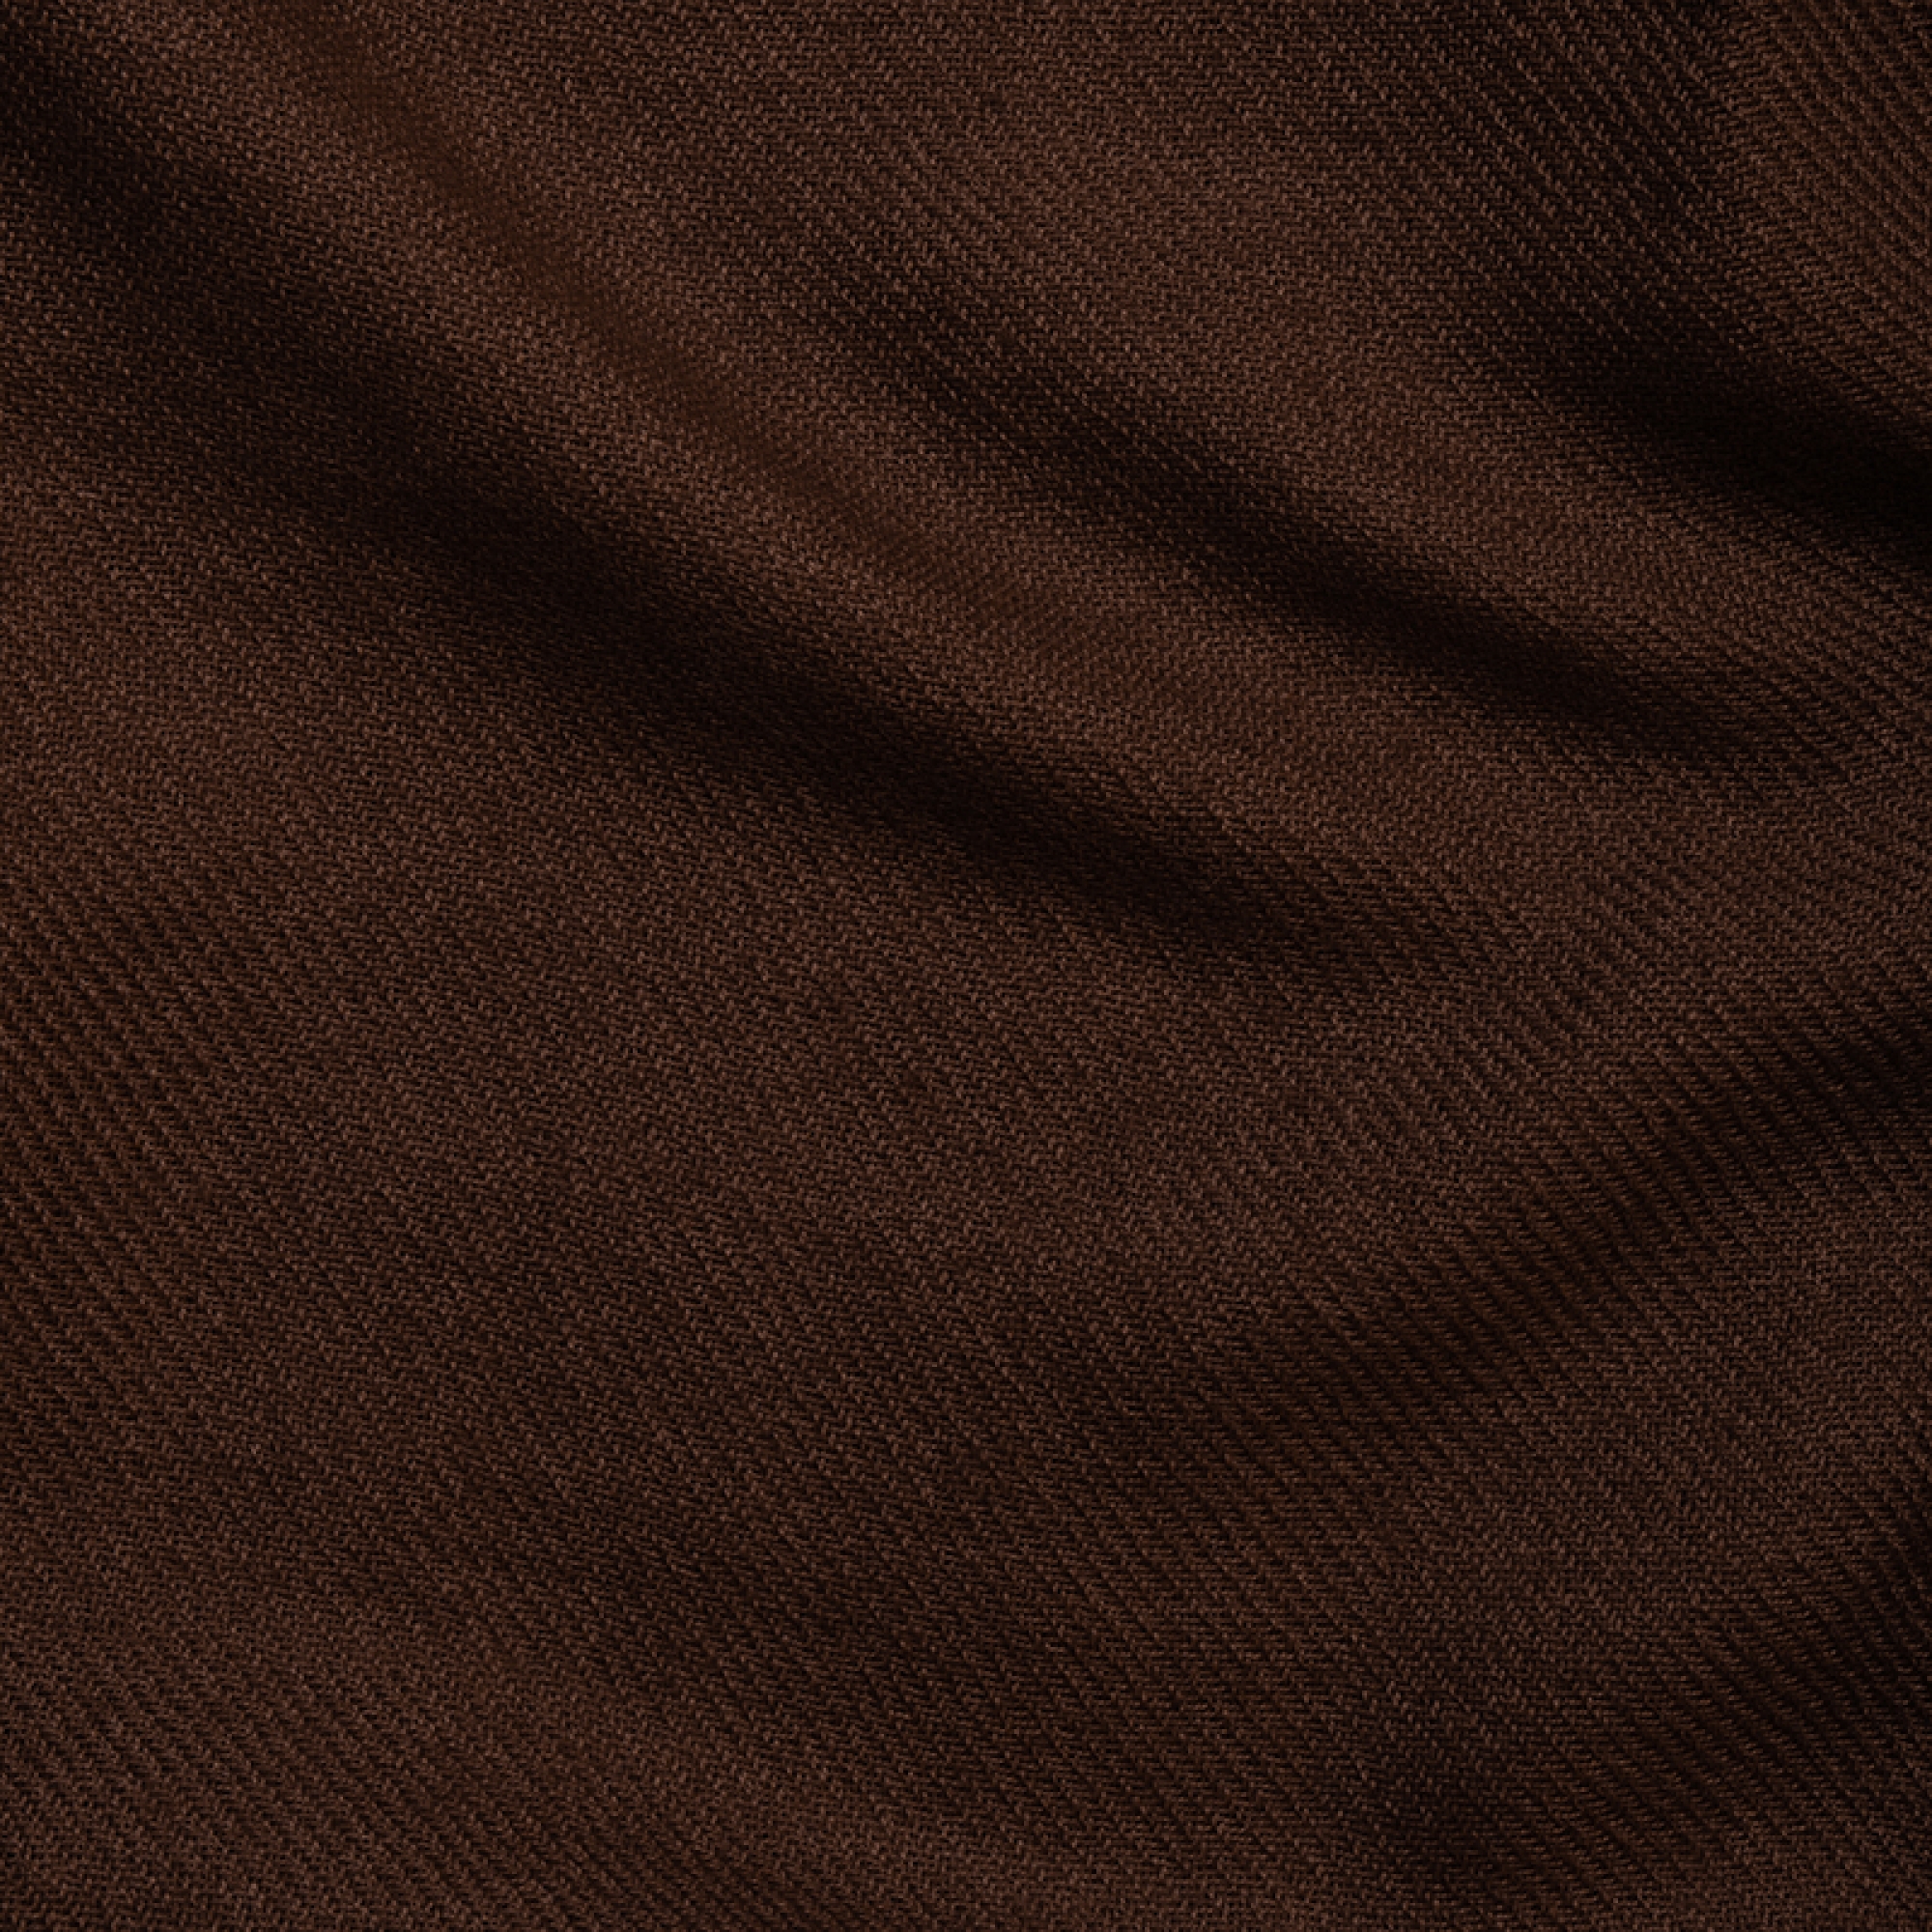 Cashmere accessori toodoo plain xl 240 x 260 cacao 240 x 260 cm